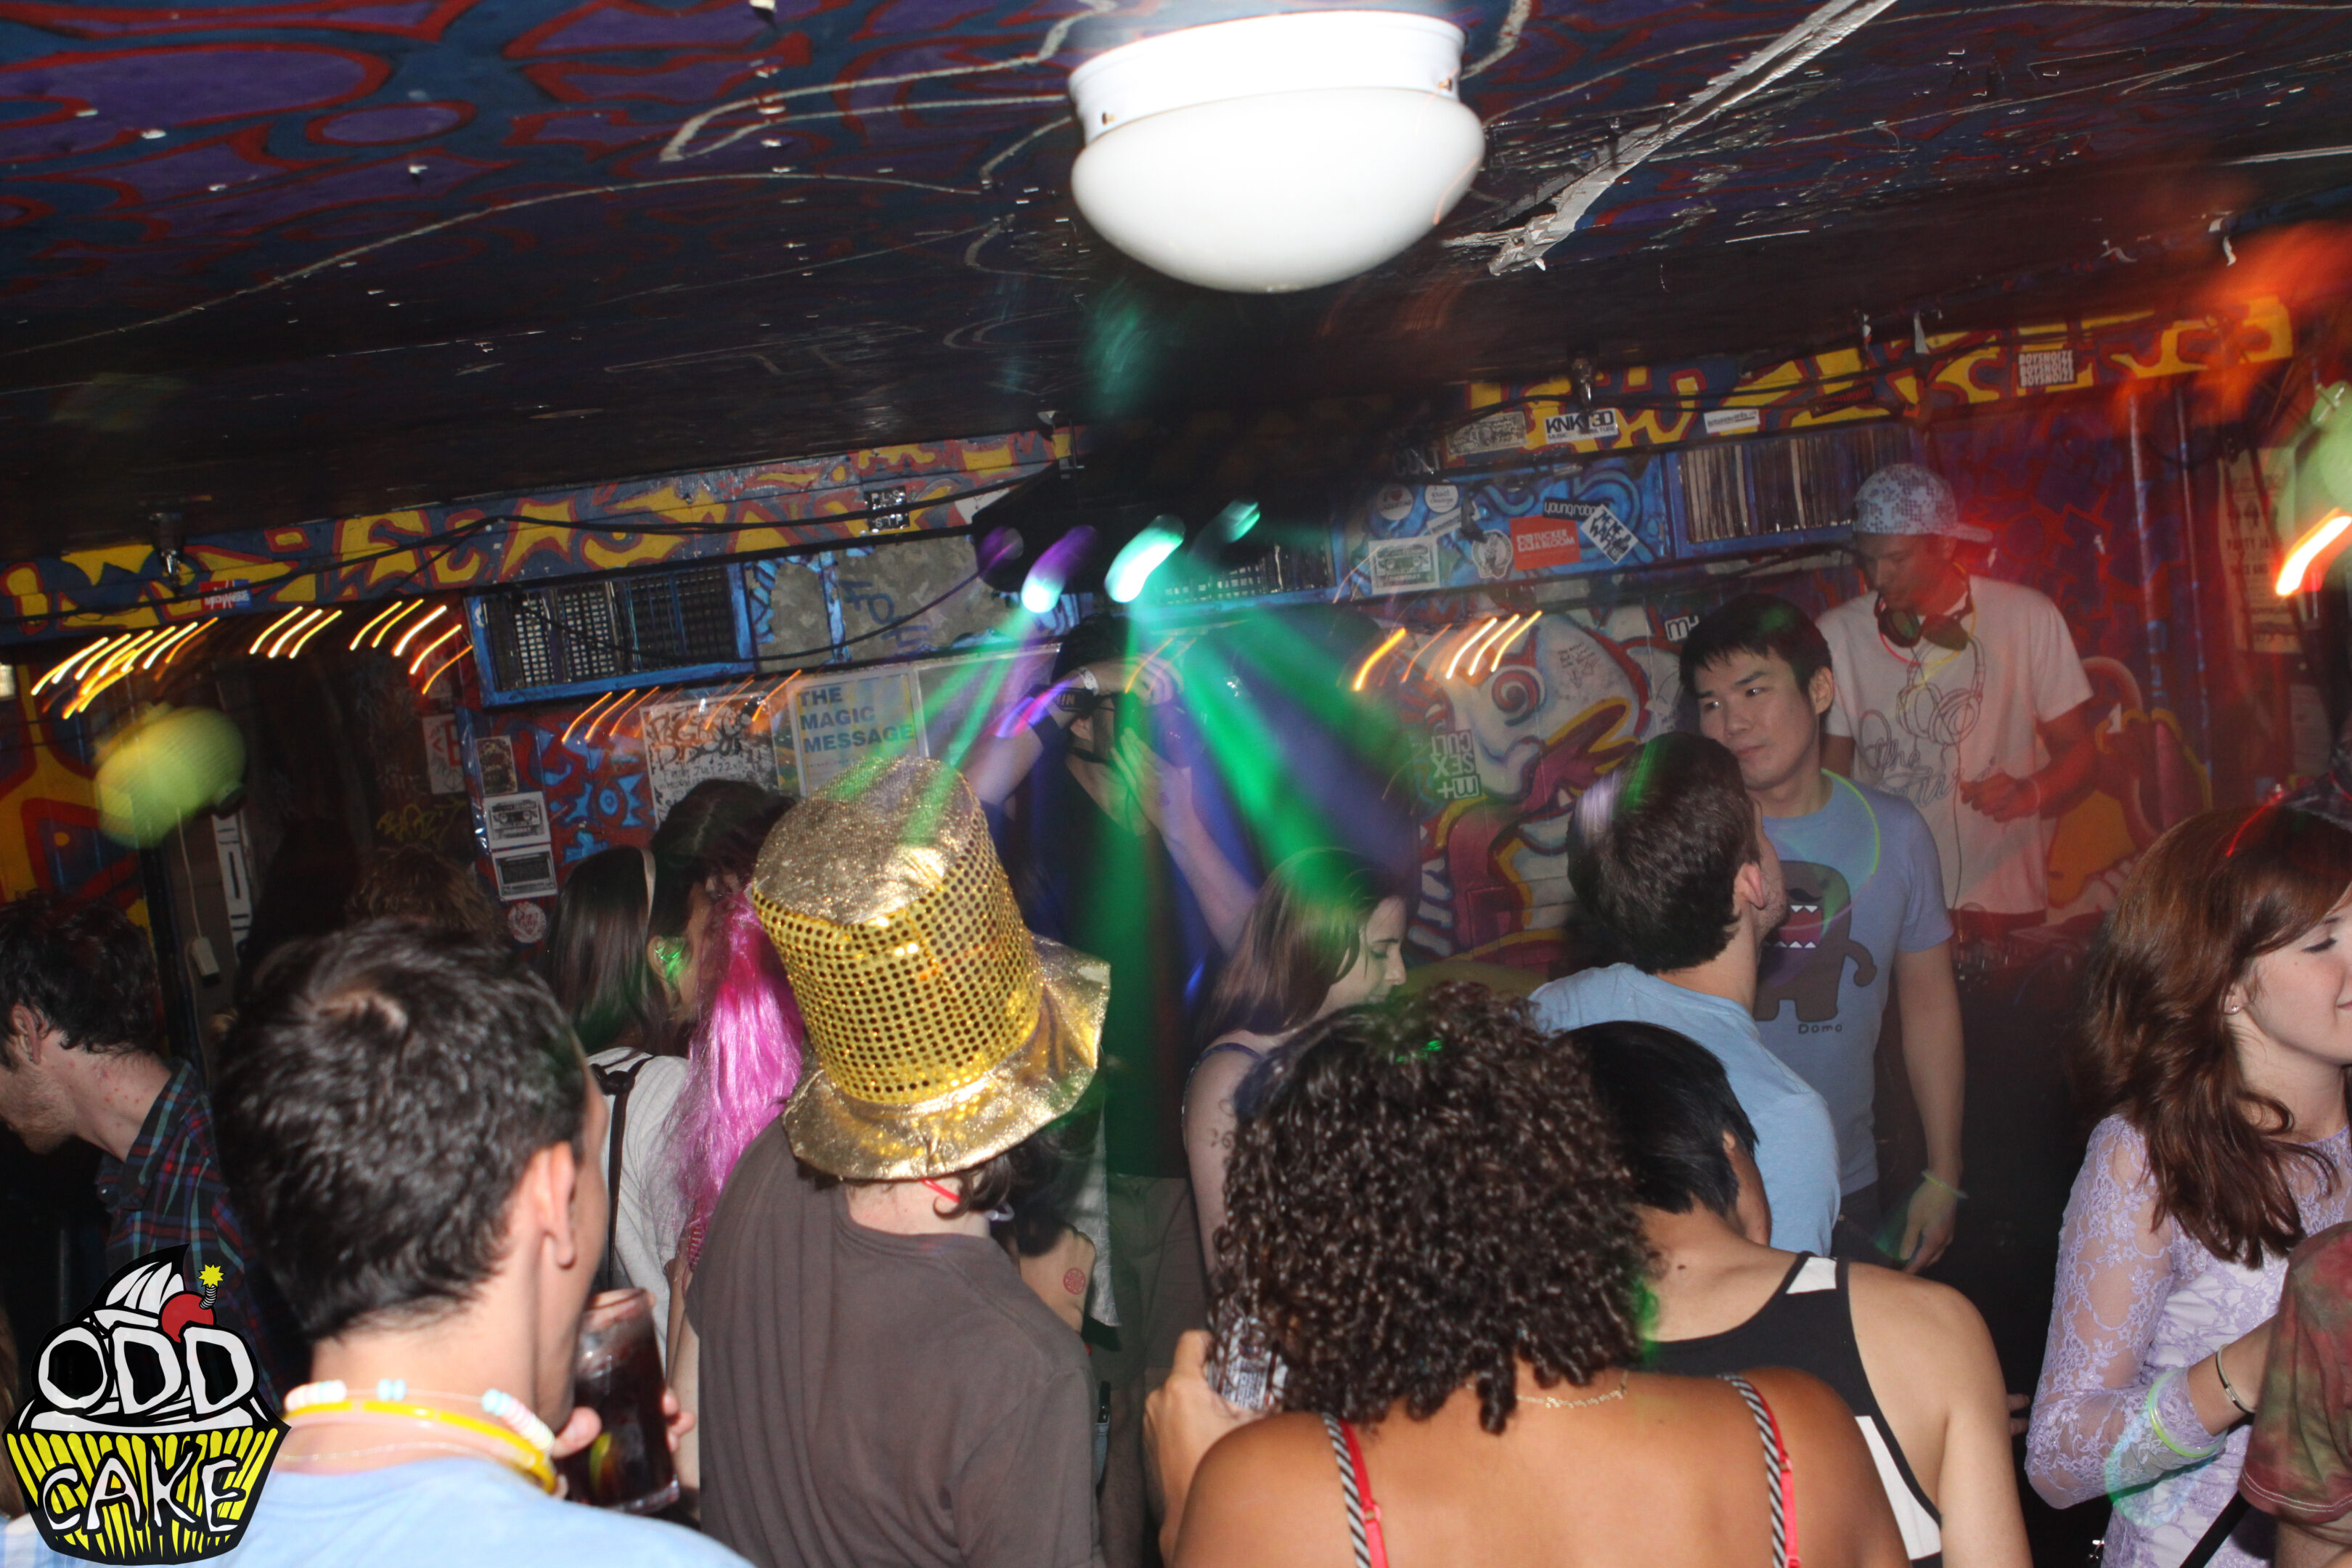 Img 0926 Oddcake Presents Digital Meltdown 07 21 2011 Medusa Lounge Philadelphia Pa Burning Man Rave Party, OddCake